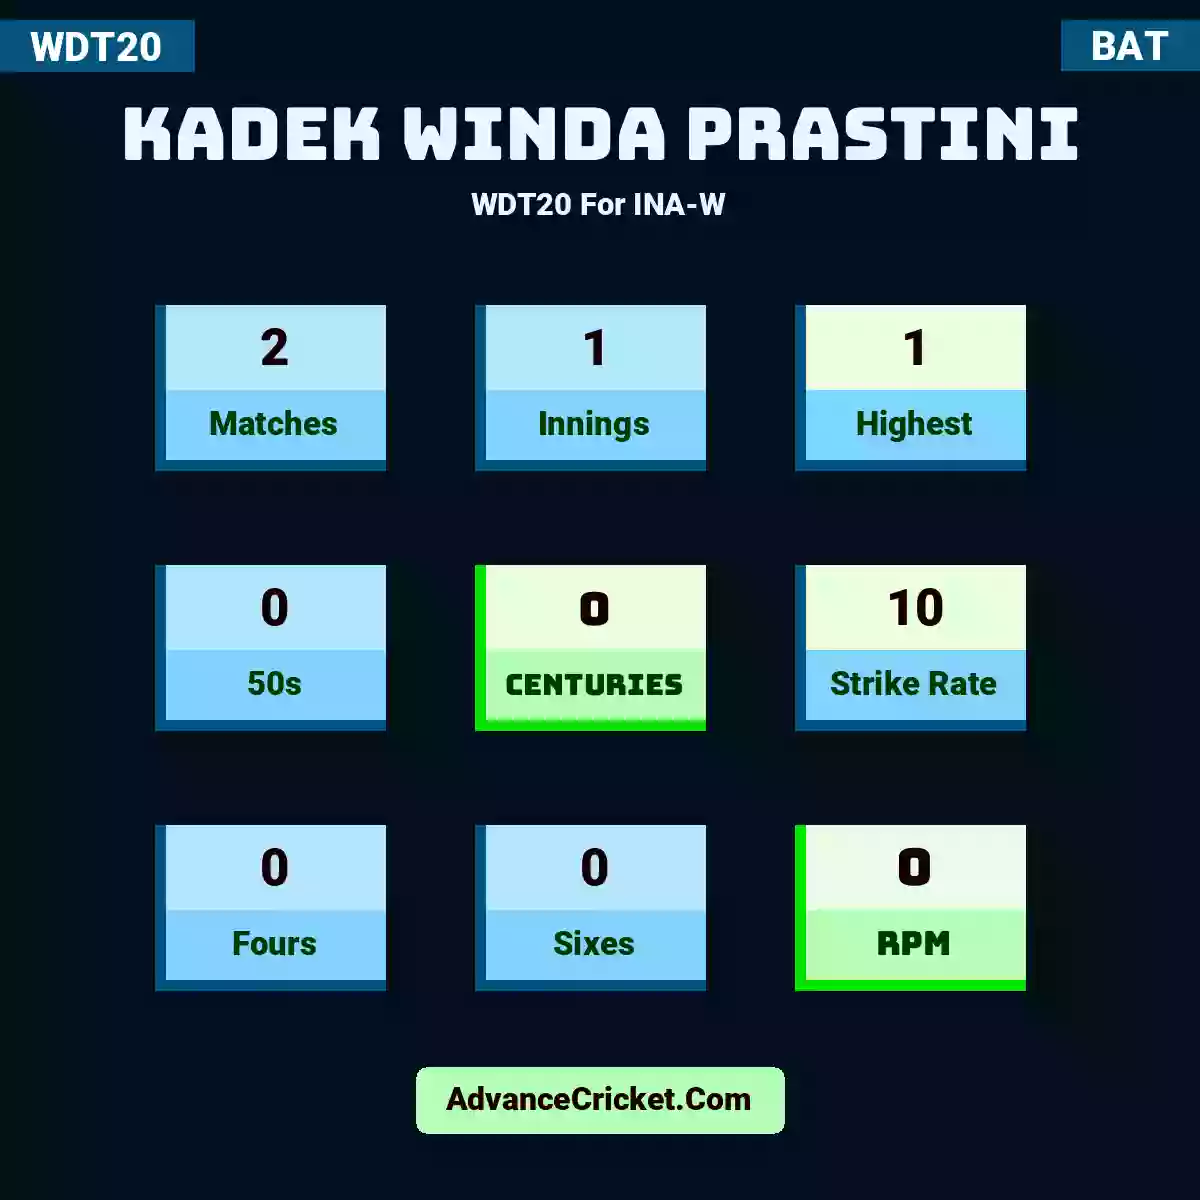 Kadek Winda Prastini WDT20  For INA-W, Kadek Winda Prastini played 2 matches, scored 1 runs as highest, 0 half-centuries, and 0 centuries, with a strike rate of 10. K.Winda.Prastini hit 0 fours and 0 sixes, with an RPM of 0.